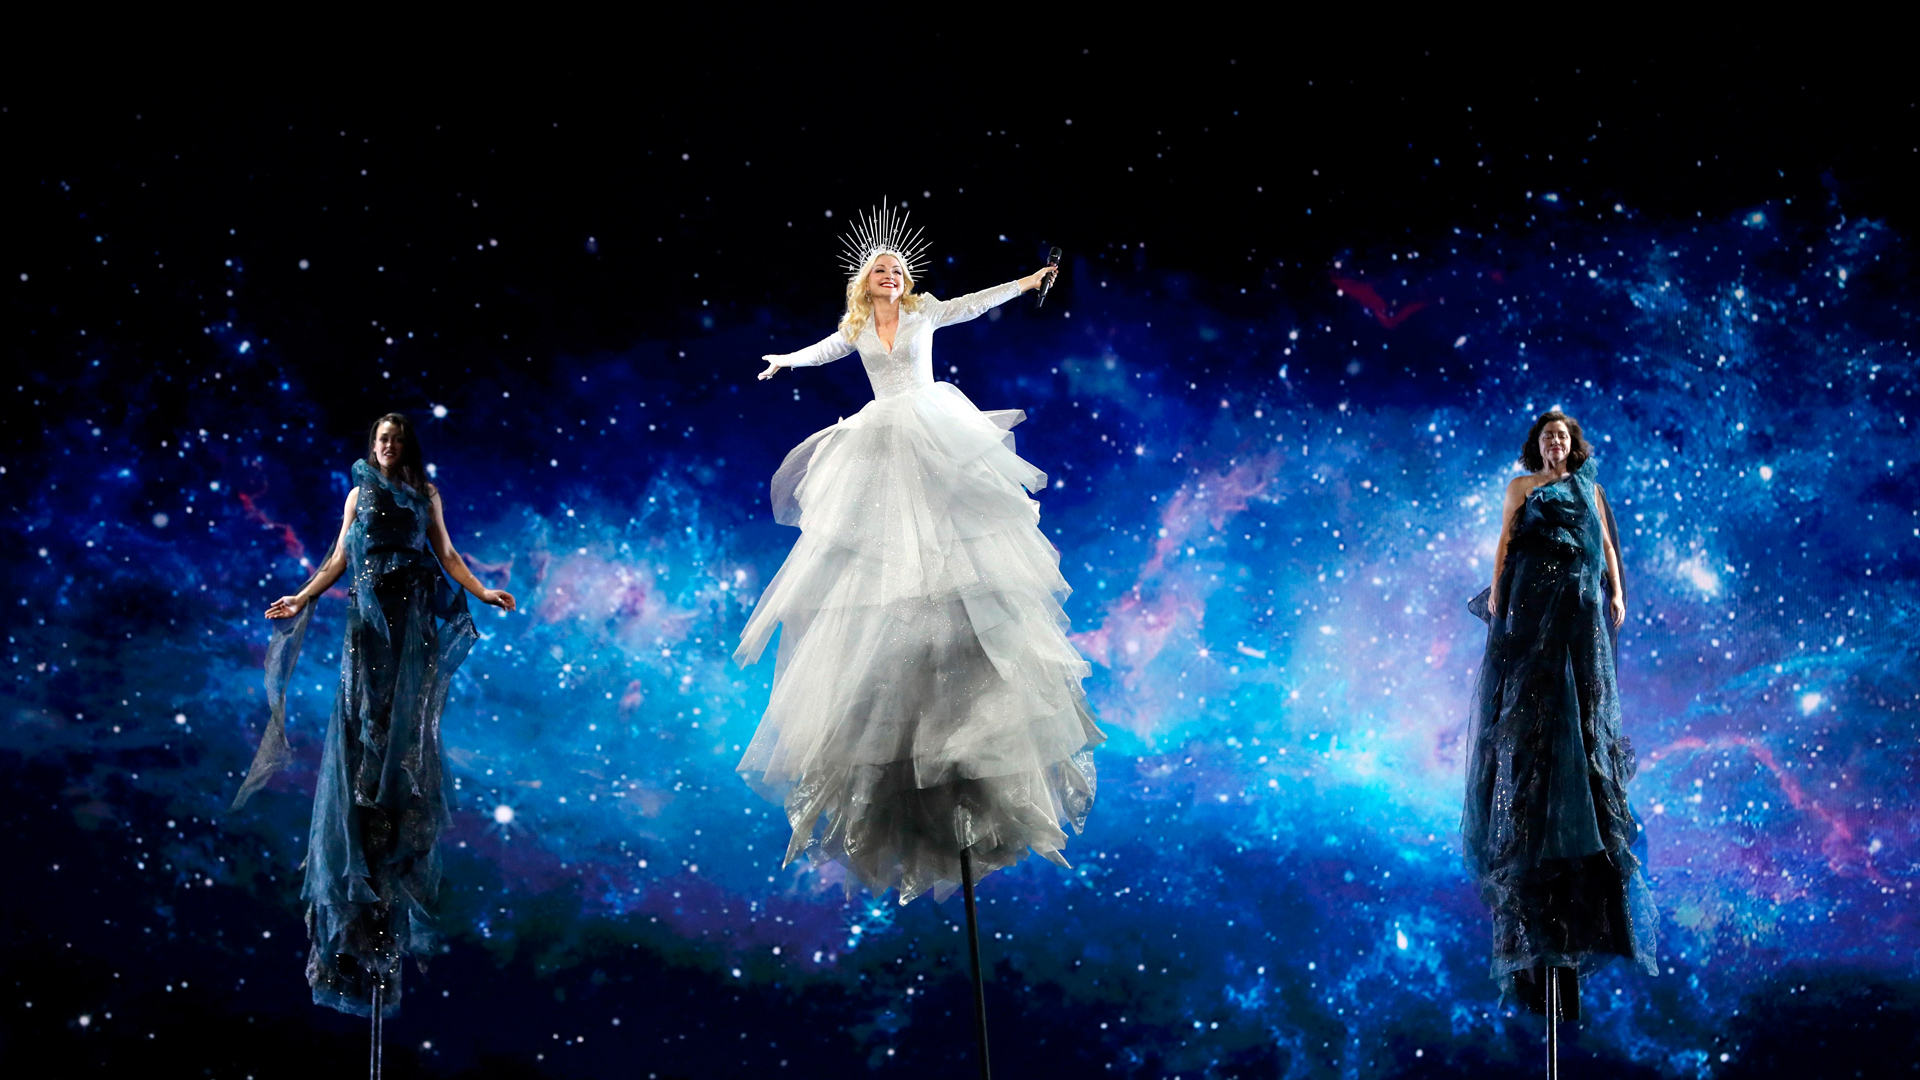 Kate Miller-Heidke performing Zero Gravity at Eurovision 2019